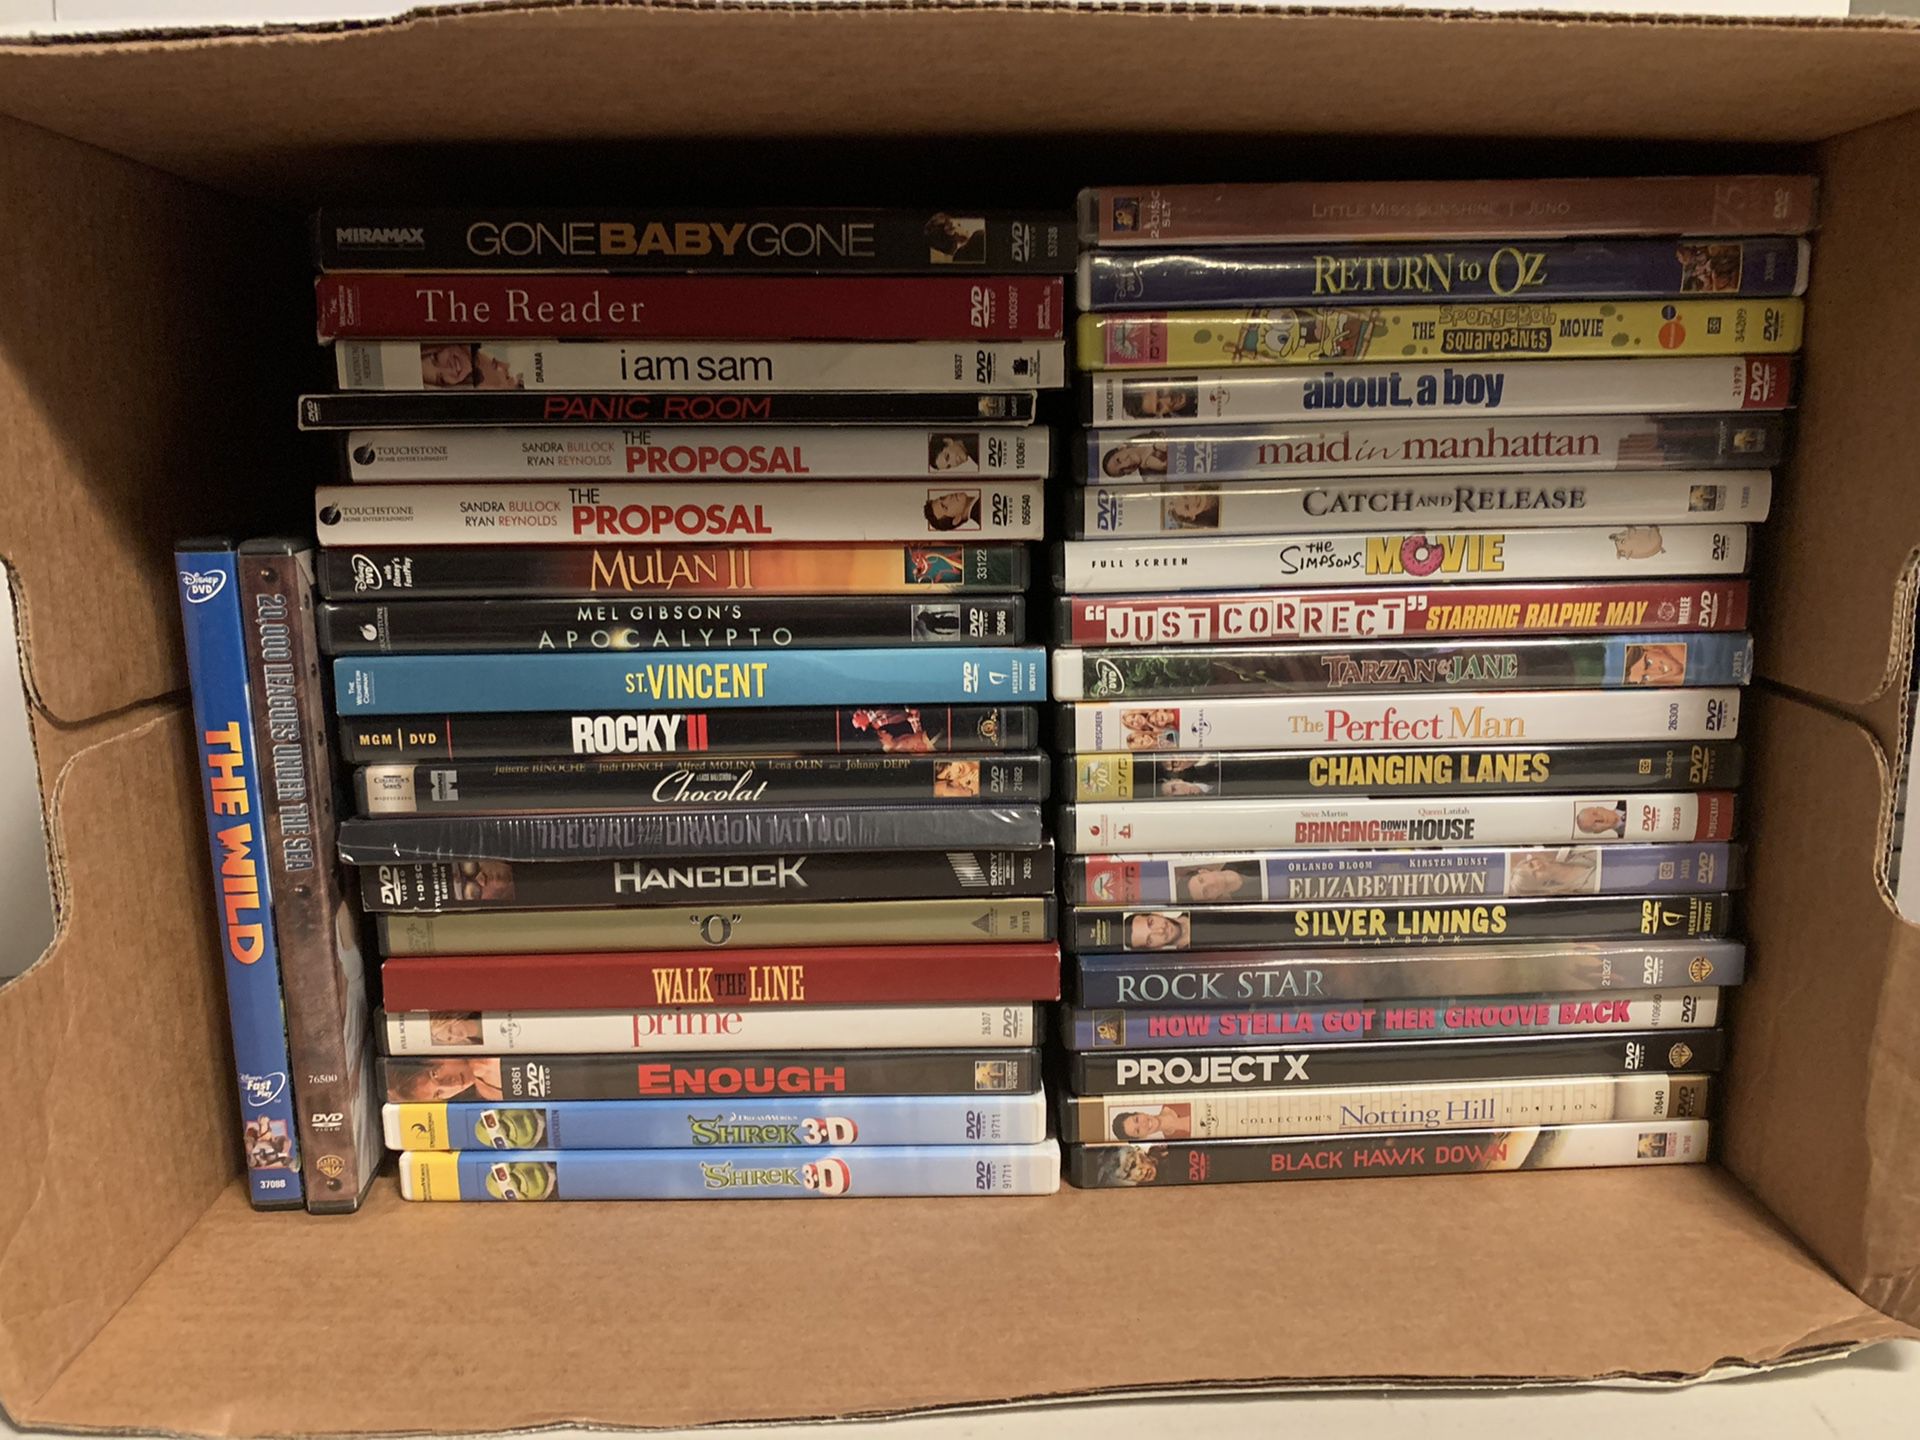 DVDs (shrek, the proposal, Simpson’s, spongebob, etc)